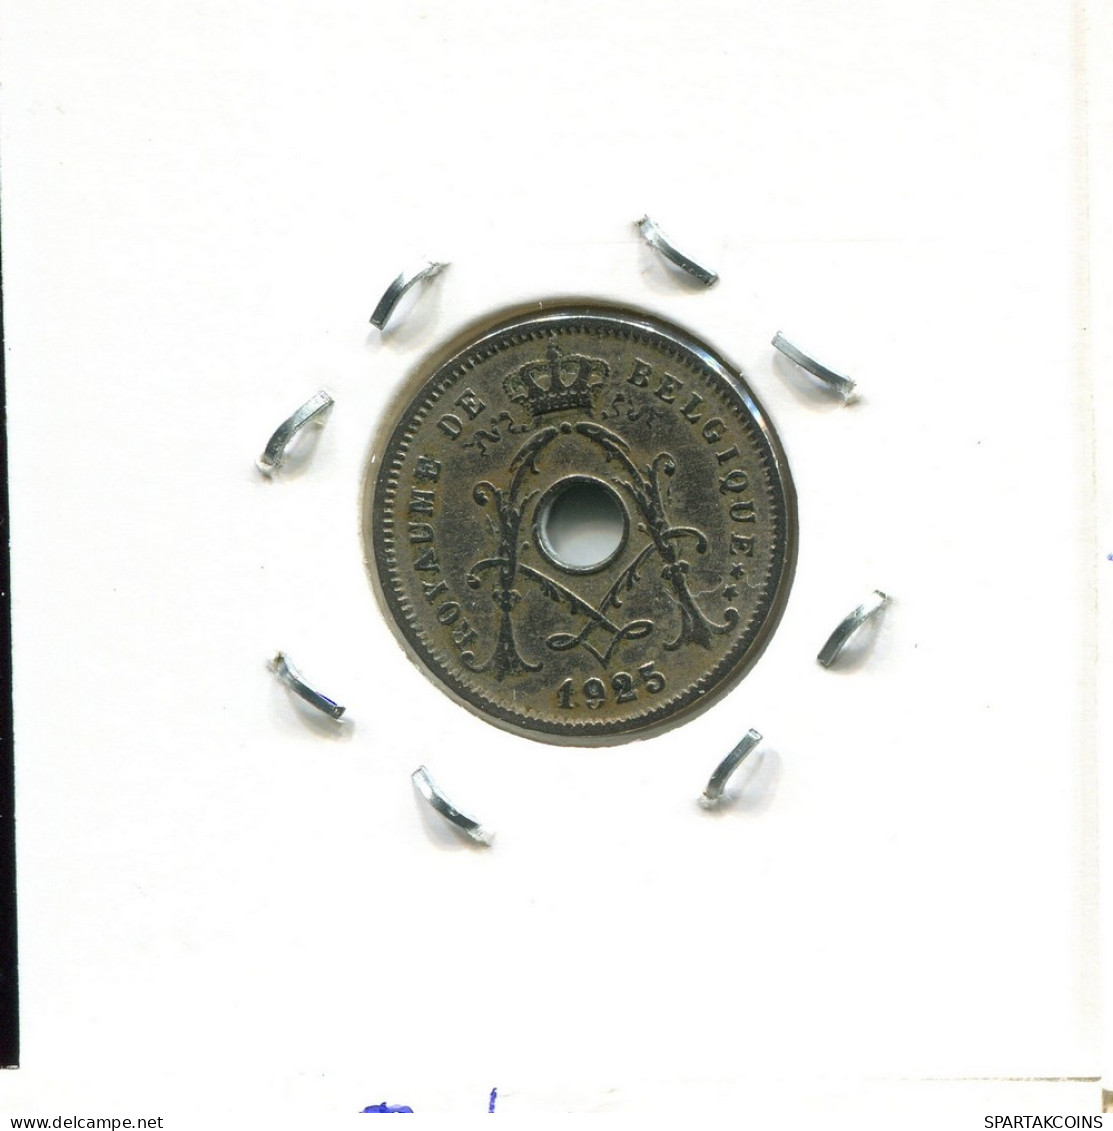 5 CENTIMES 1925 FRENCH Text BÉLGICA BELGIUM Moneda #BA258.E - 5 Cents